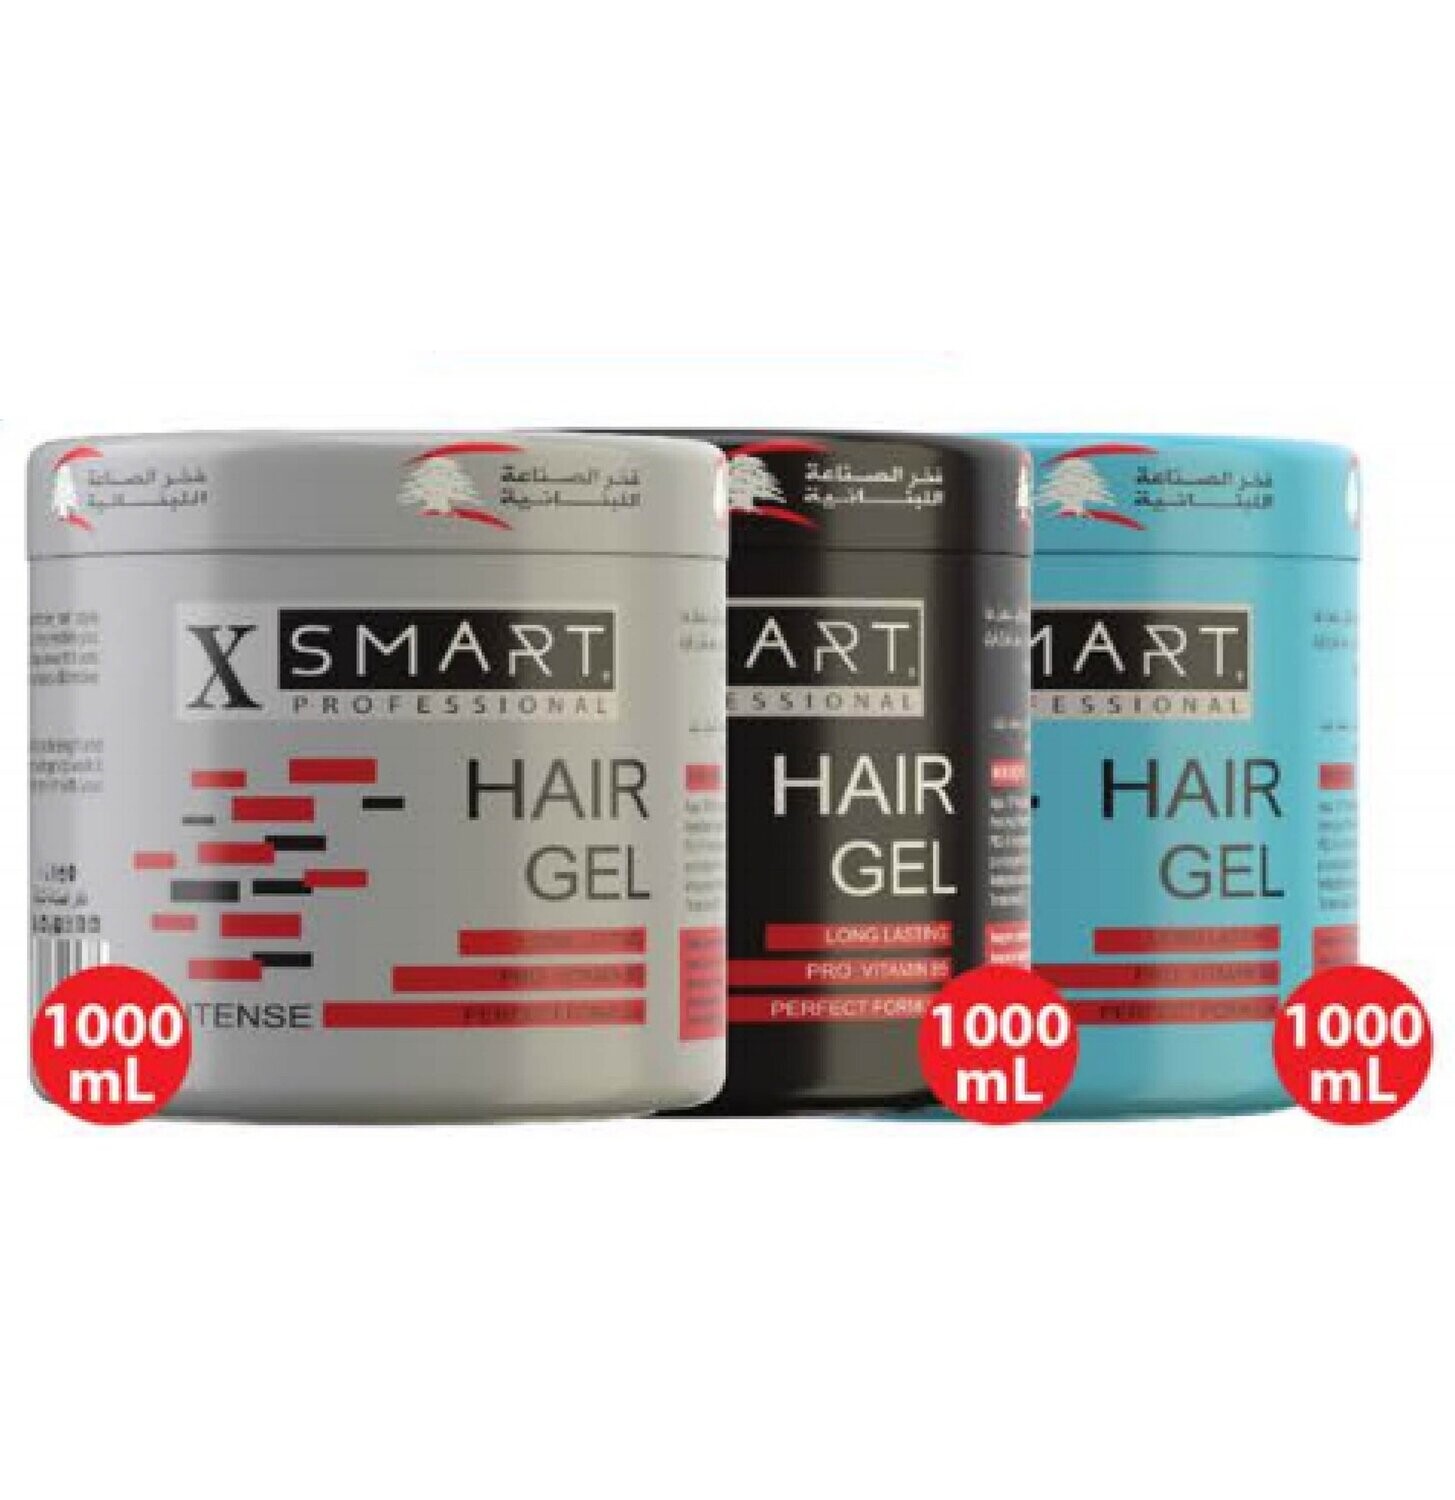 XSMART – HAIR GEL – 1000ML